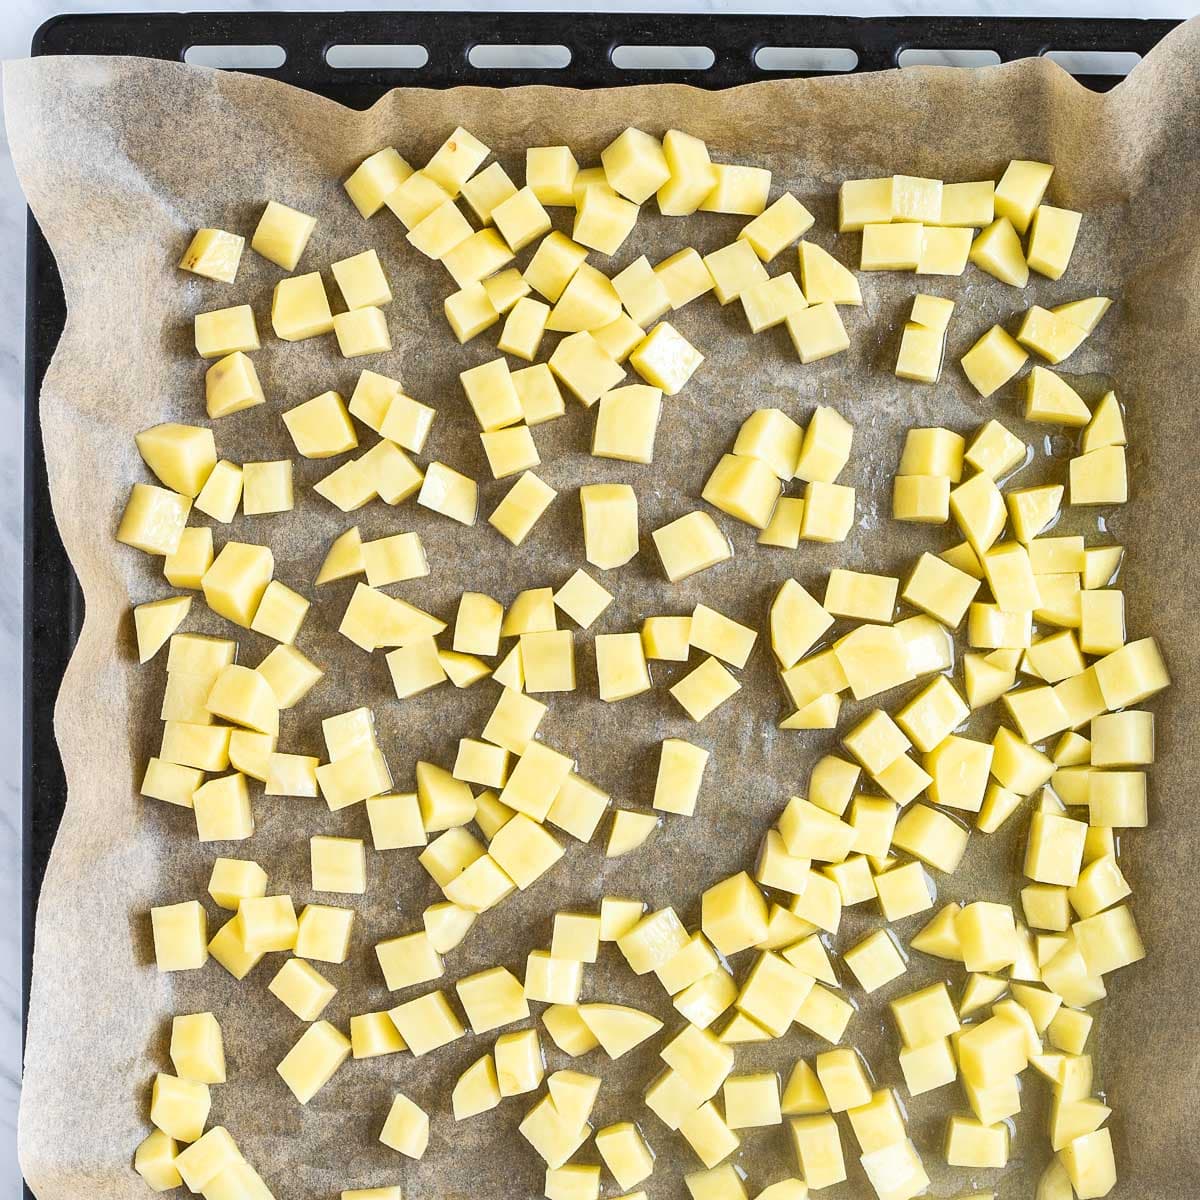 Sheet pan with yellow, raw, diced potatoes.